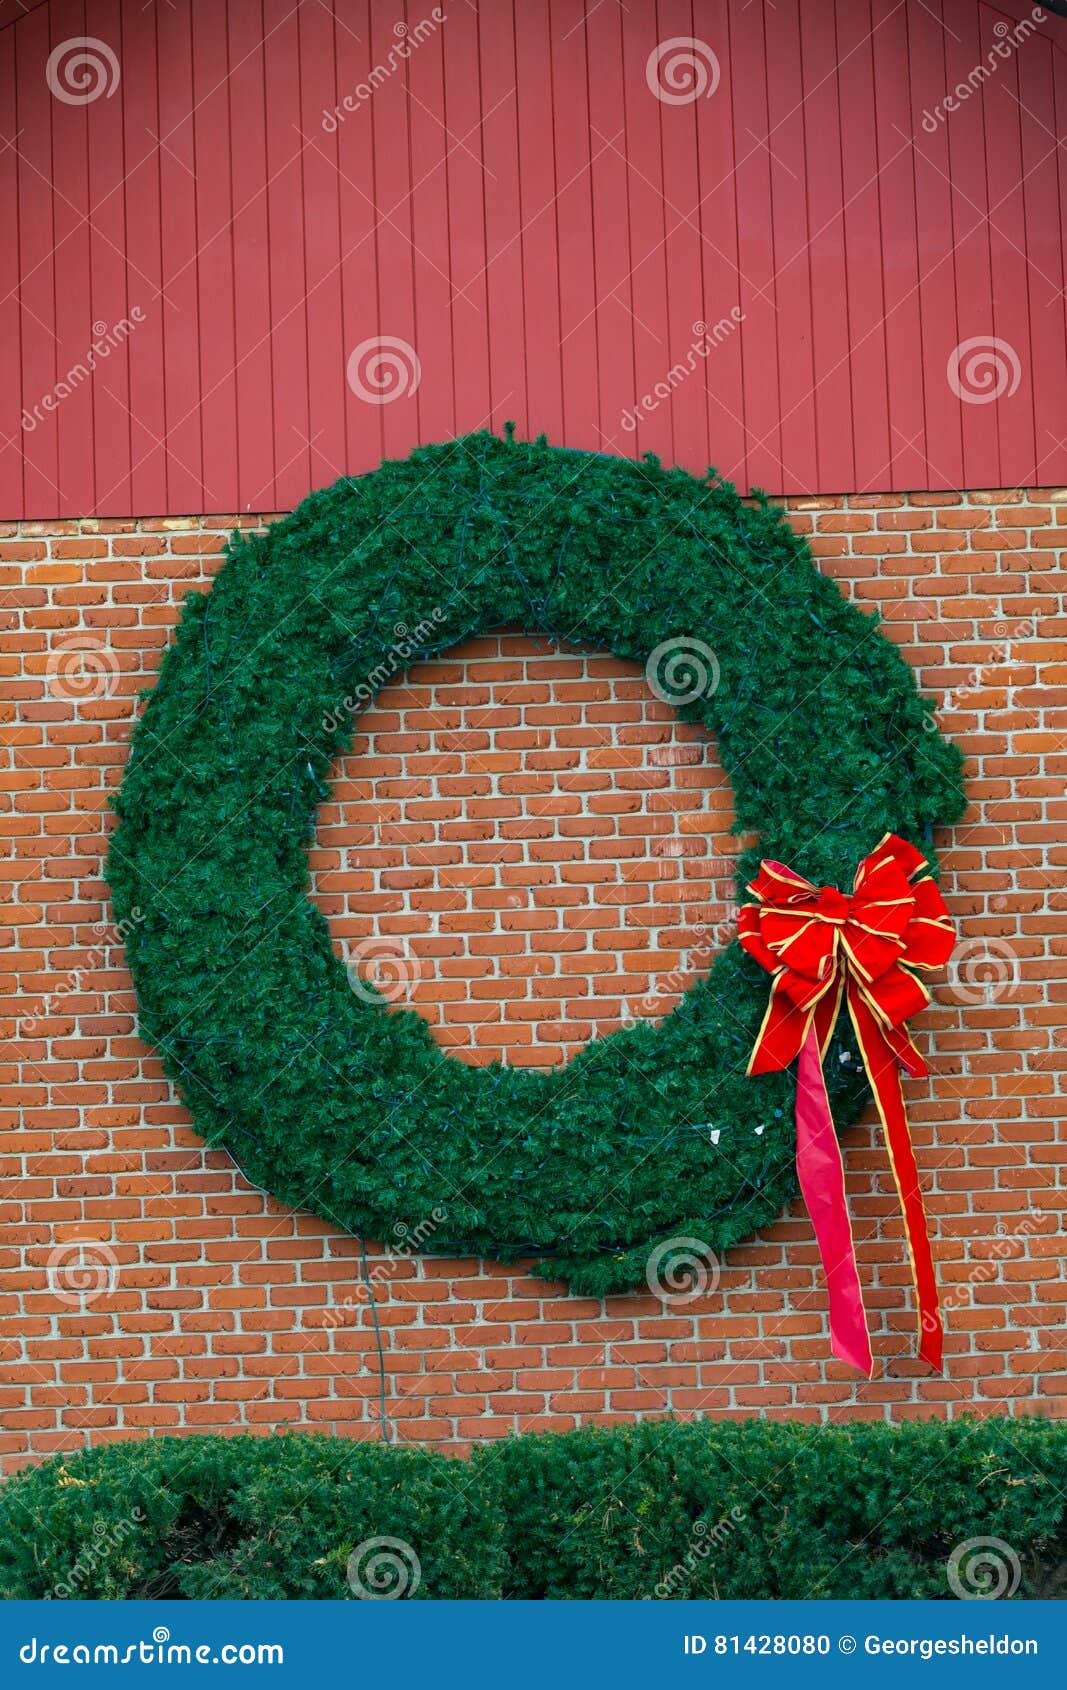 wreath on the brick wall